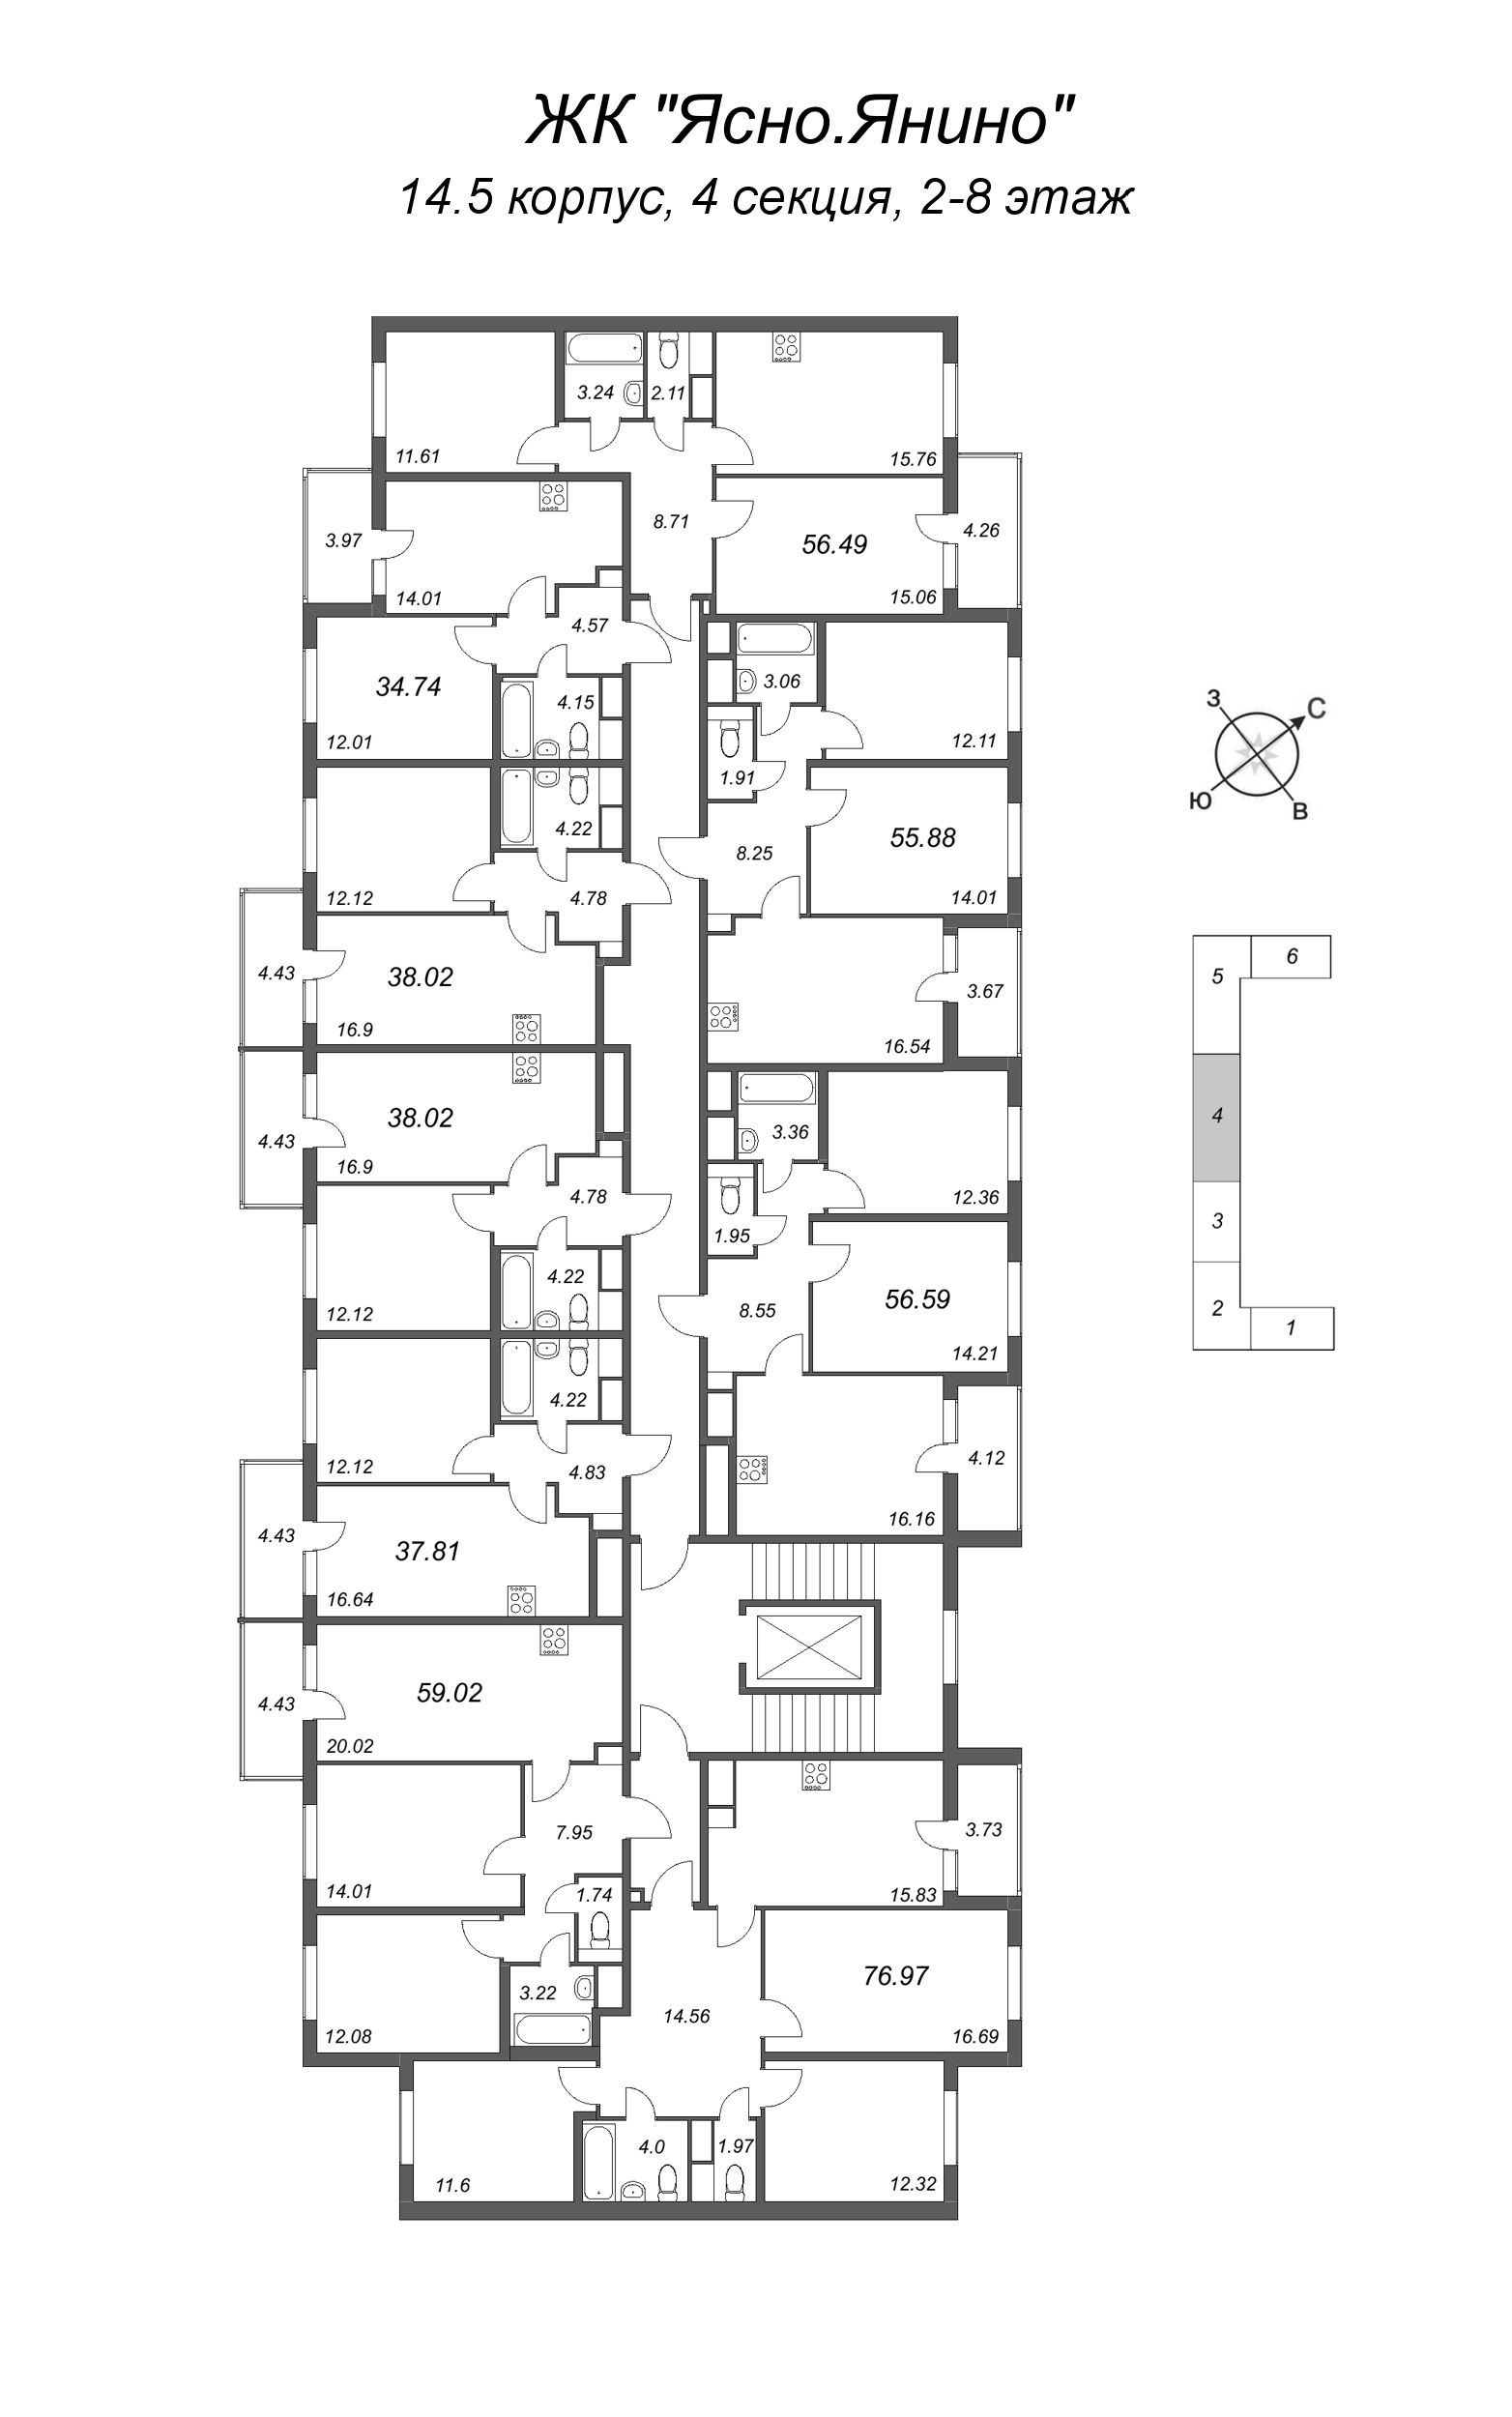 3-комнатная (Евро) квартира, 55.88 м² - планировка этажа